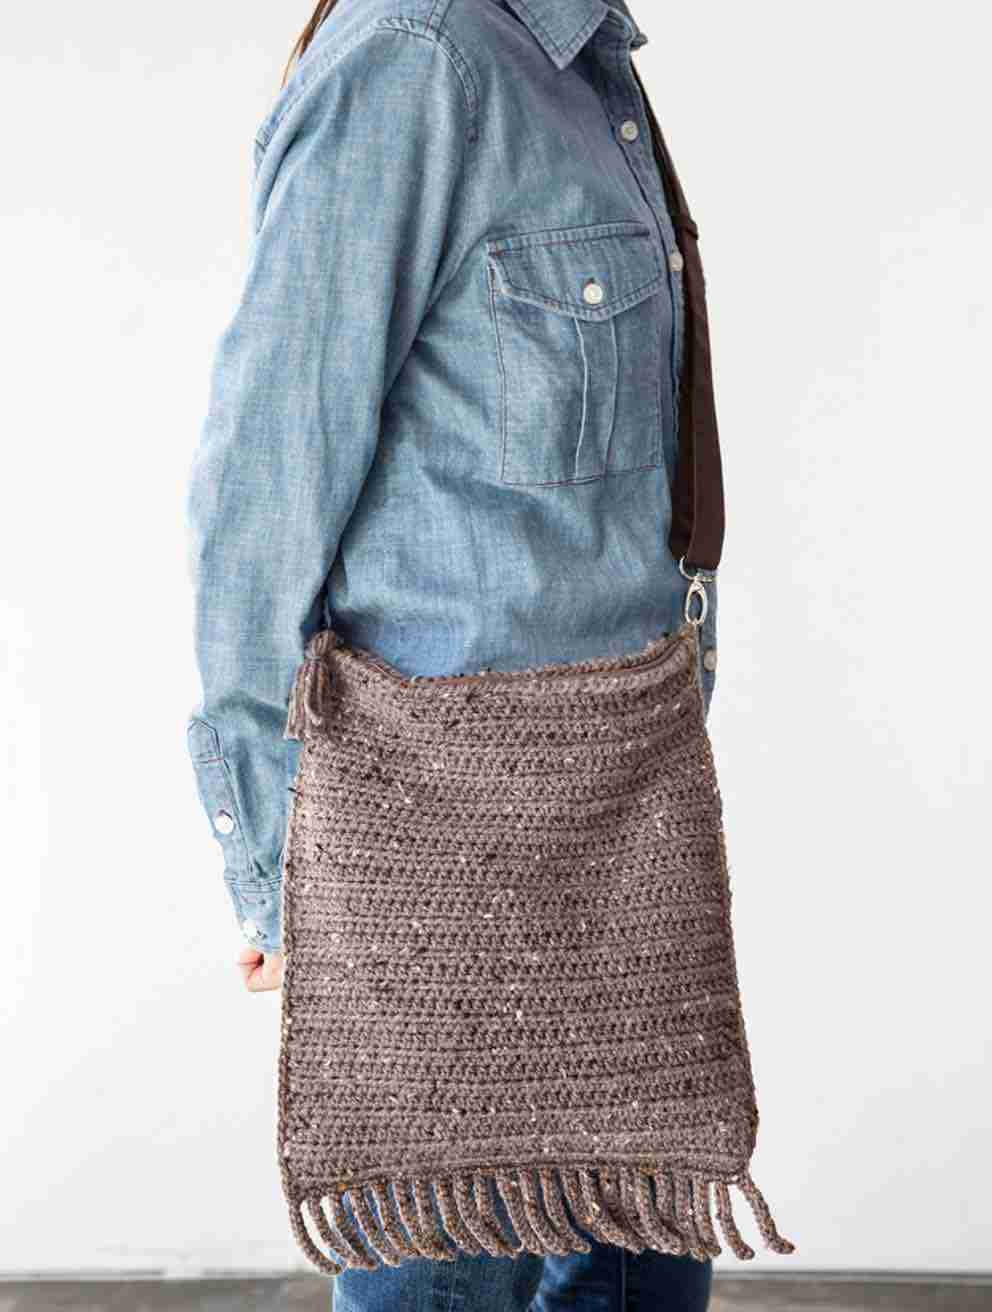 Crochet Tote Bag Pattern Free - Darcy